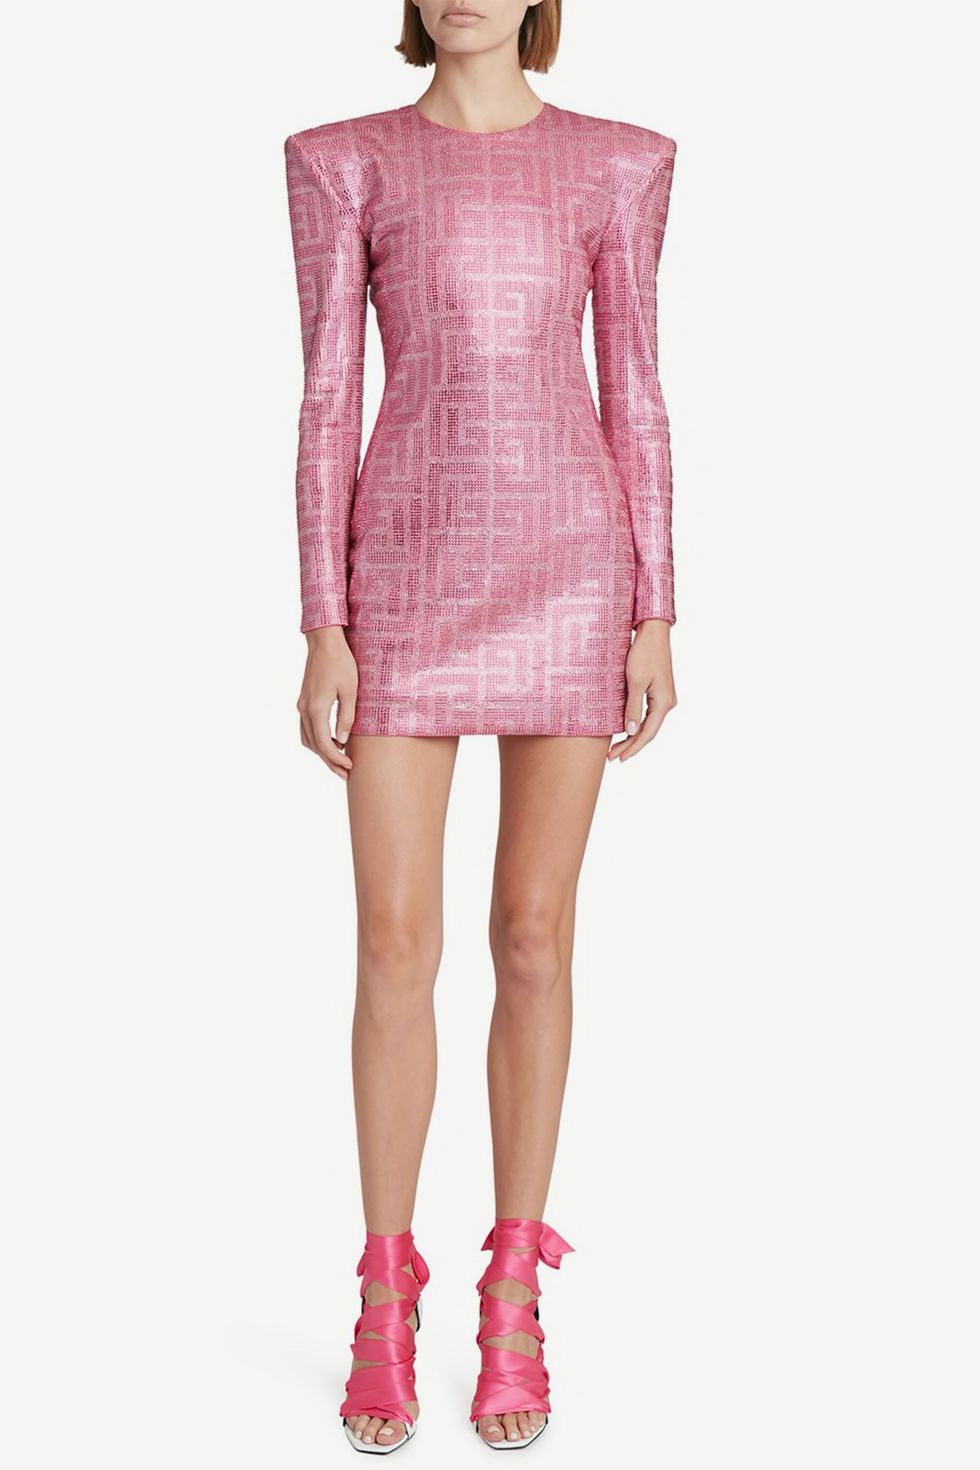 Balmain x Barbie Monogram Strass Embellished Mini Dress